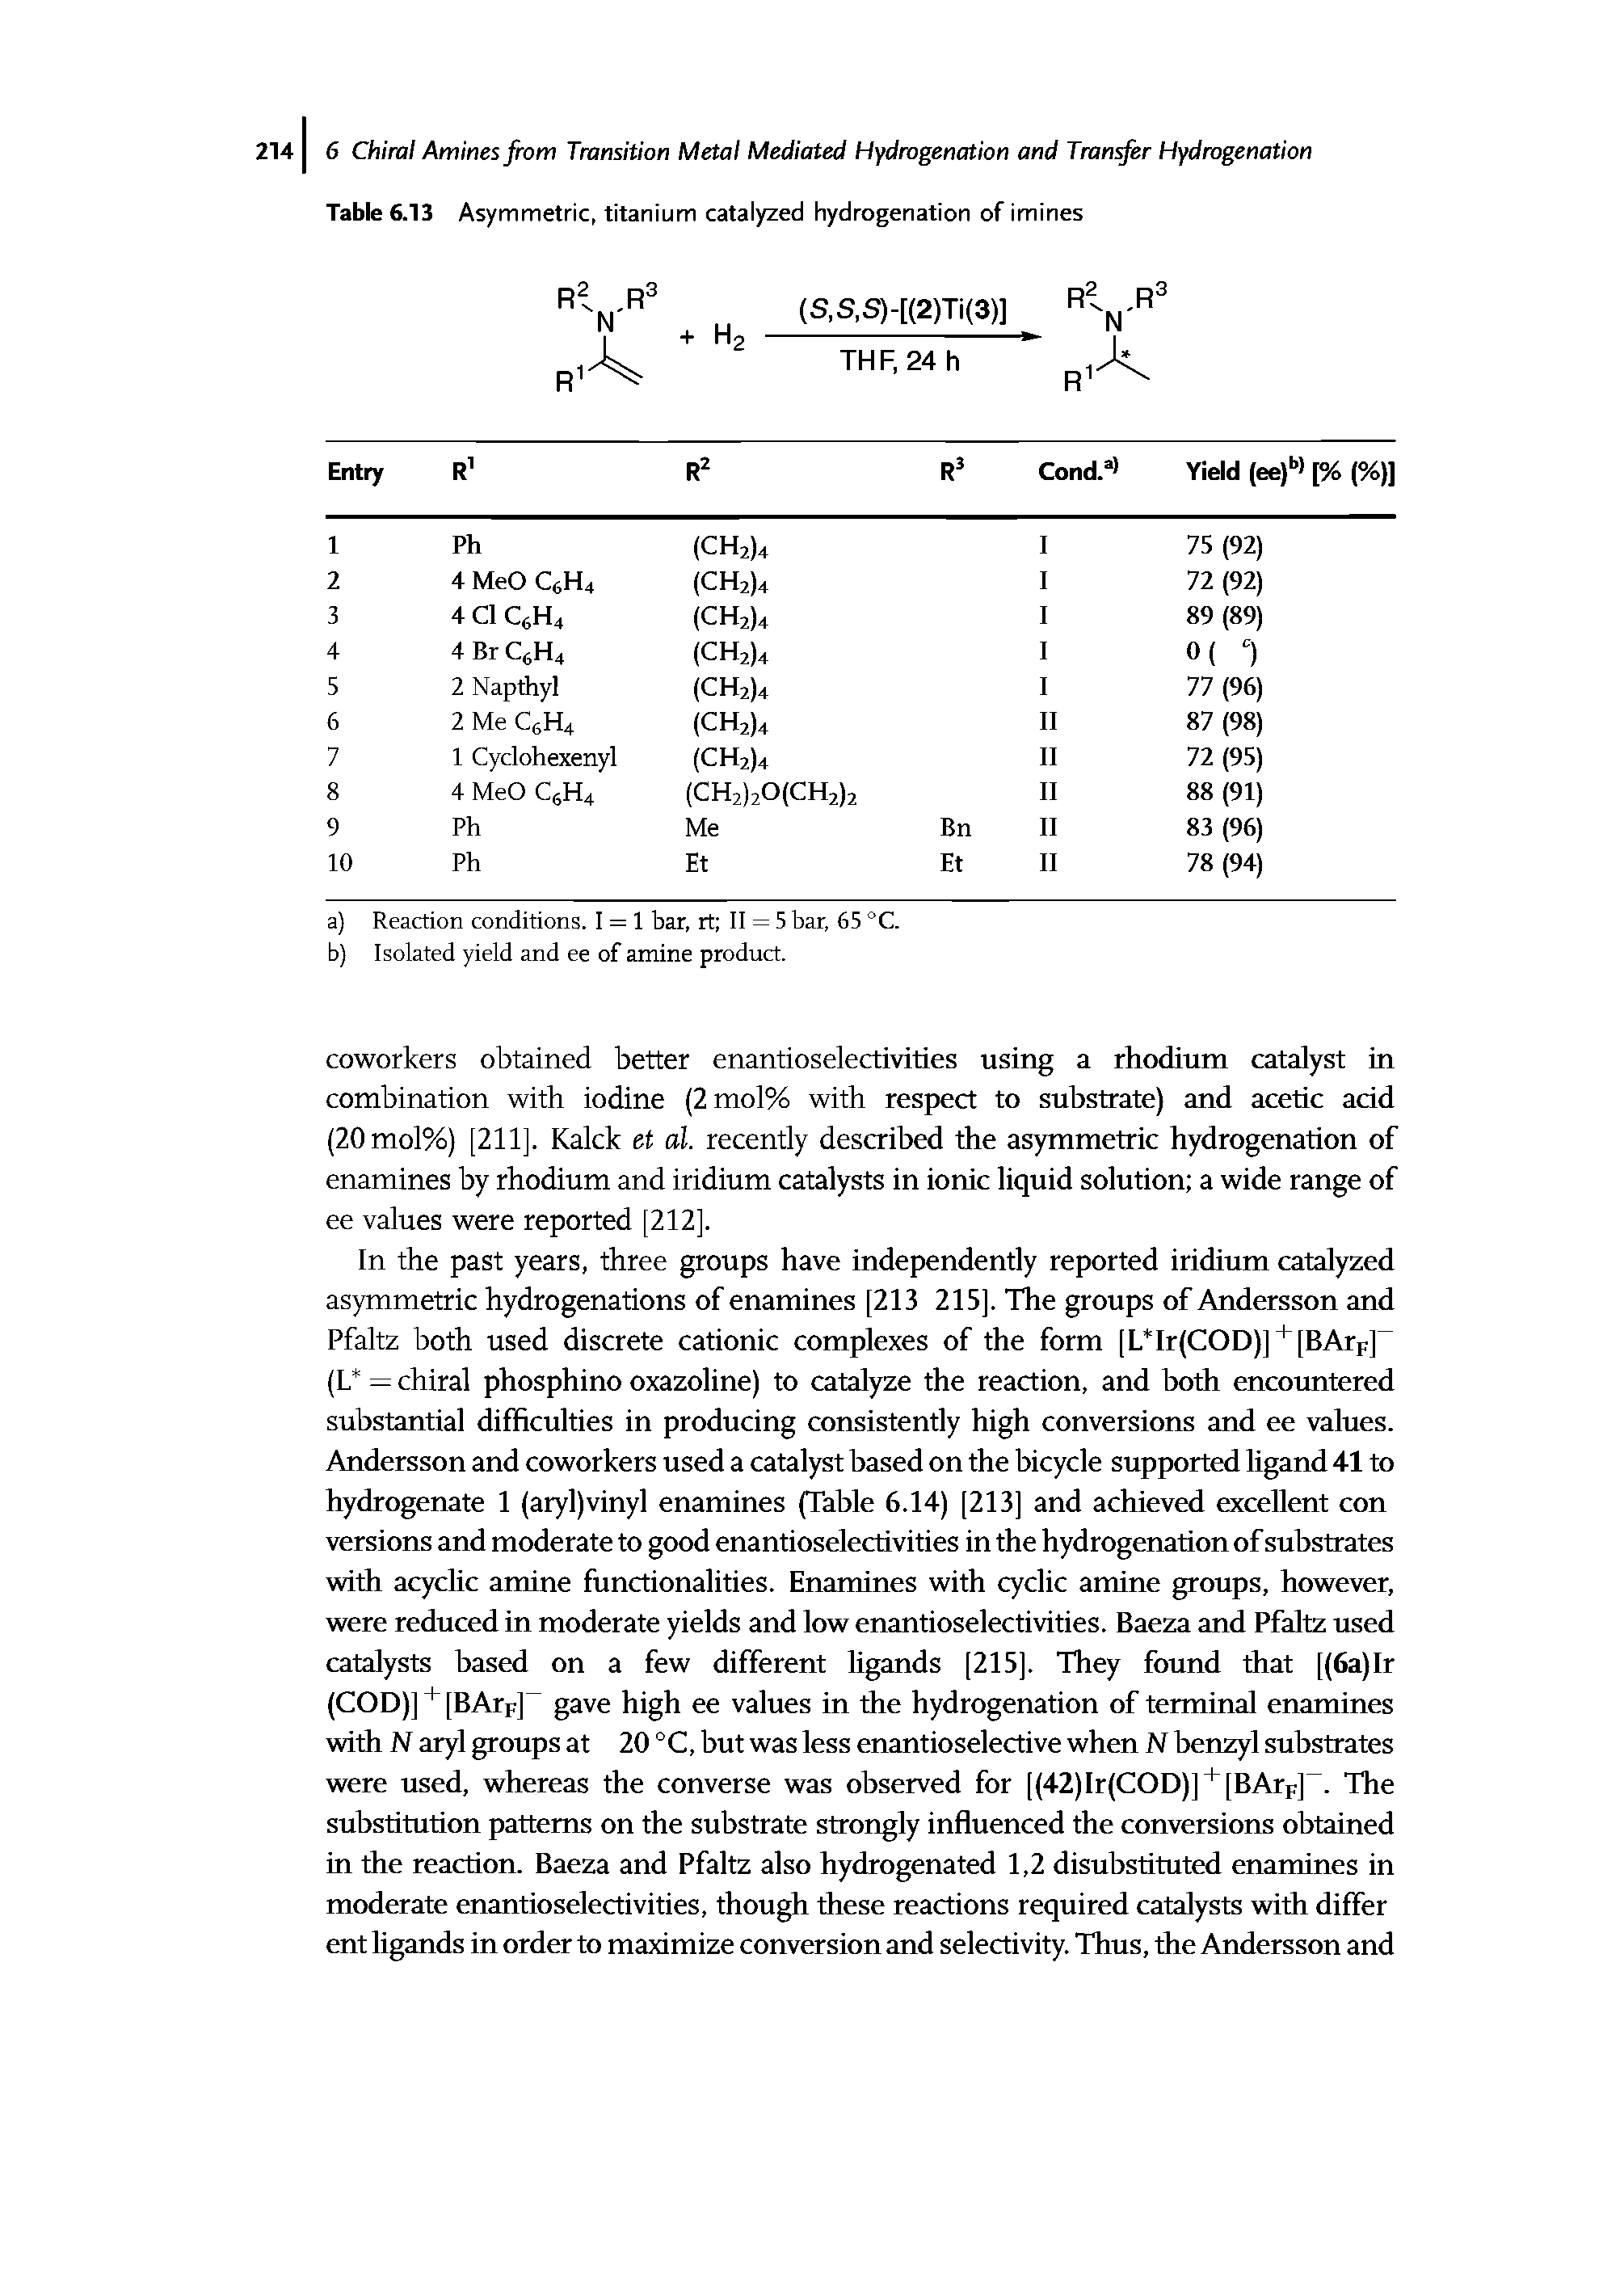 Table 6.13 Asymmetric, titanium catalyzed hydrogenation of imines...